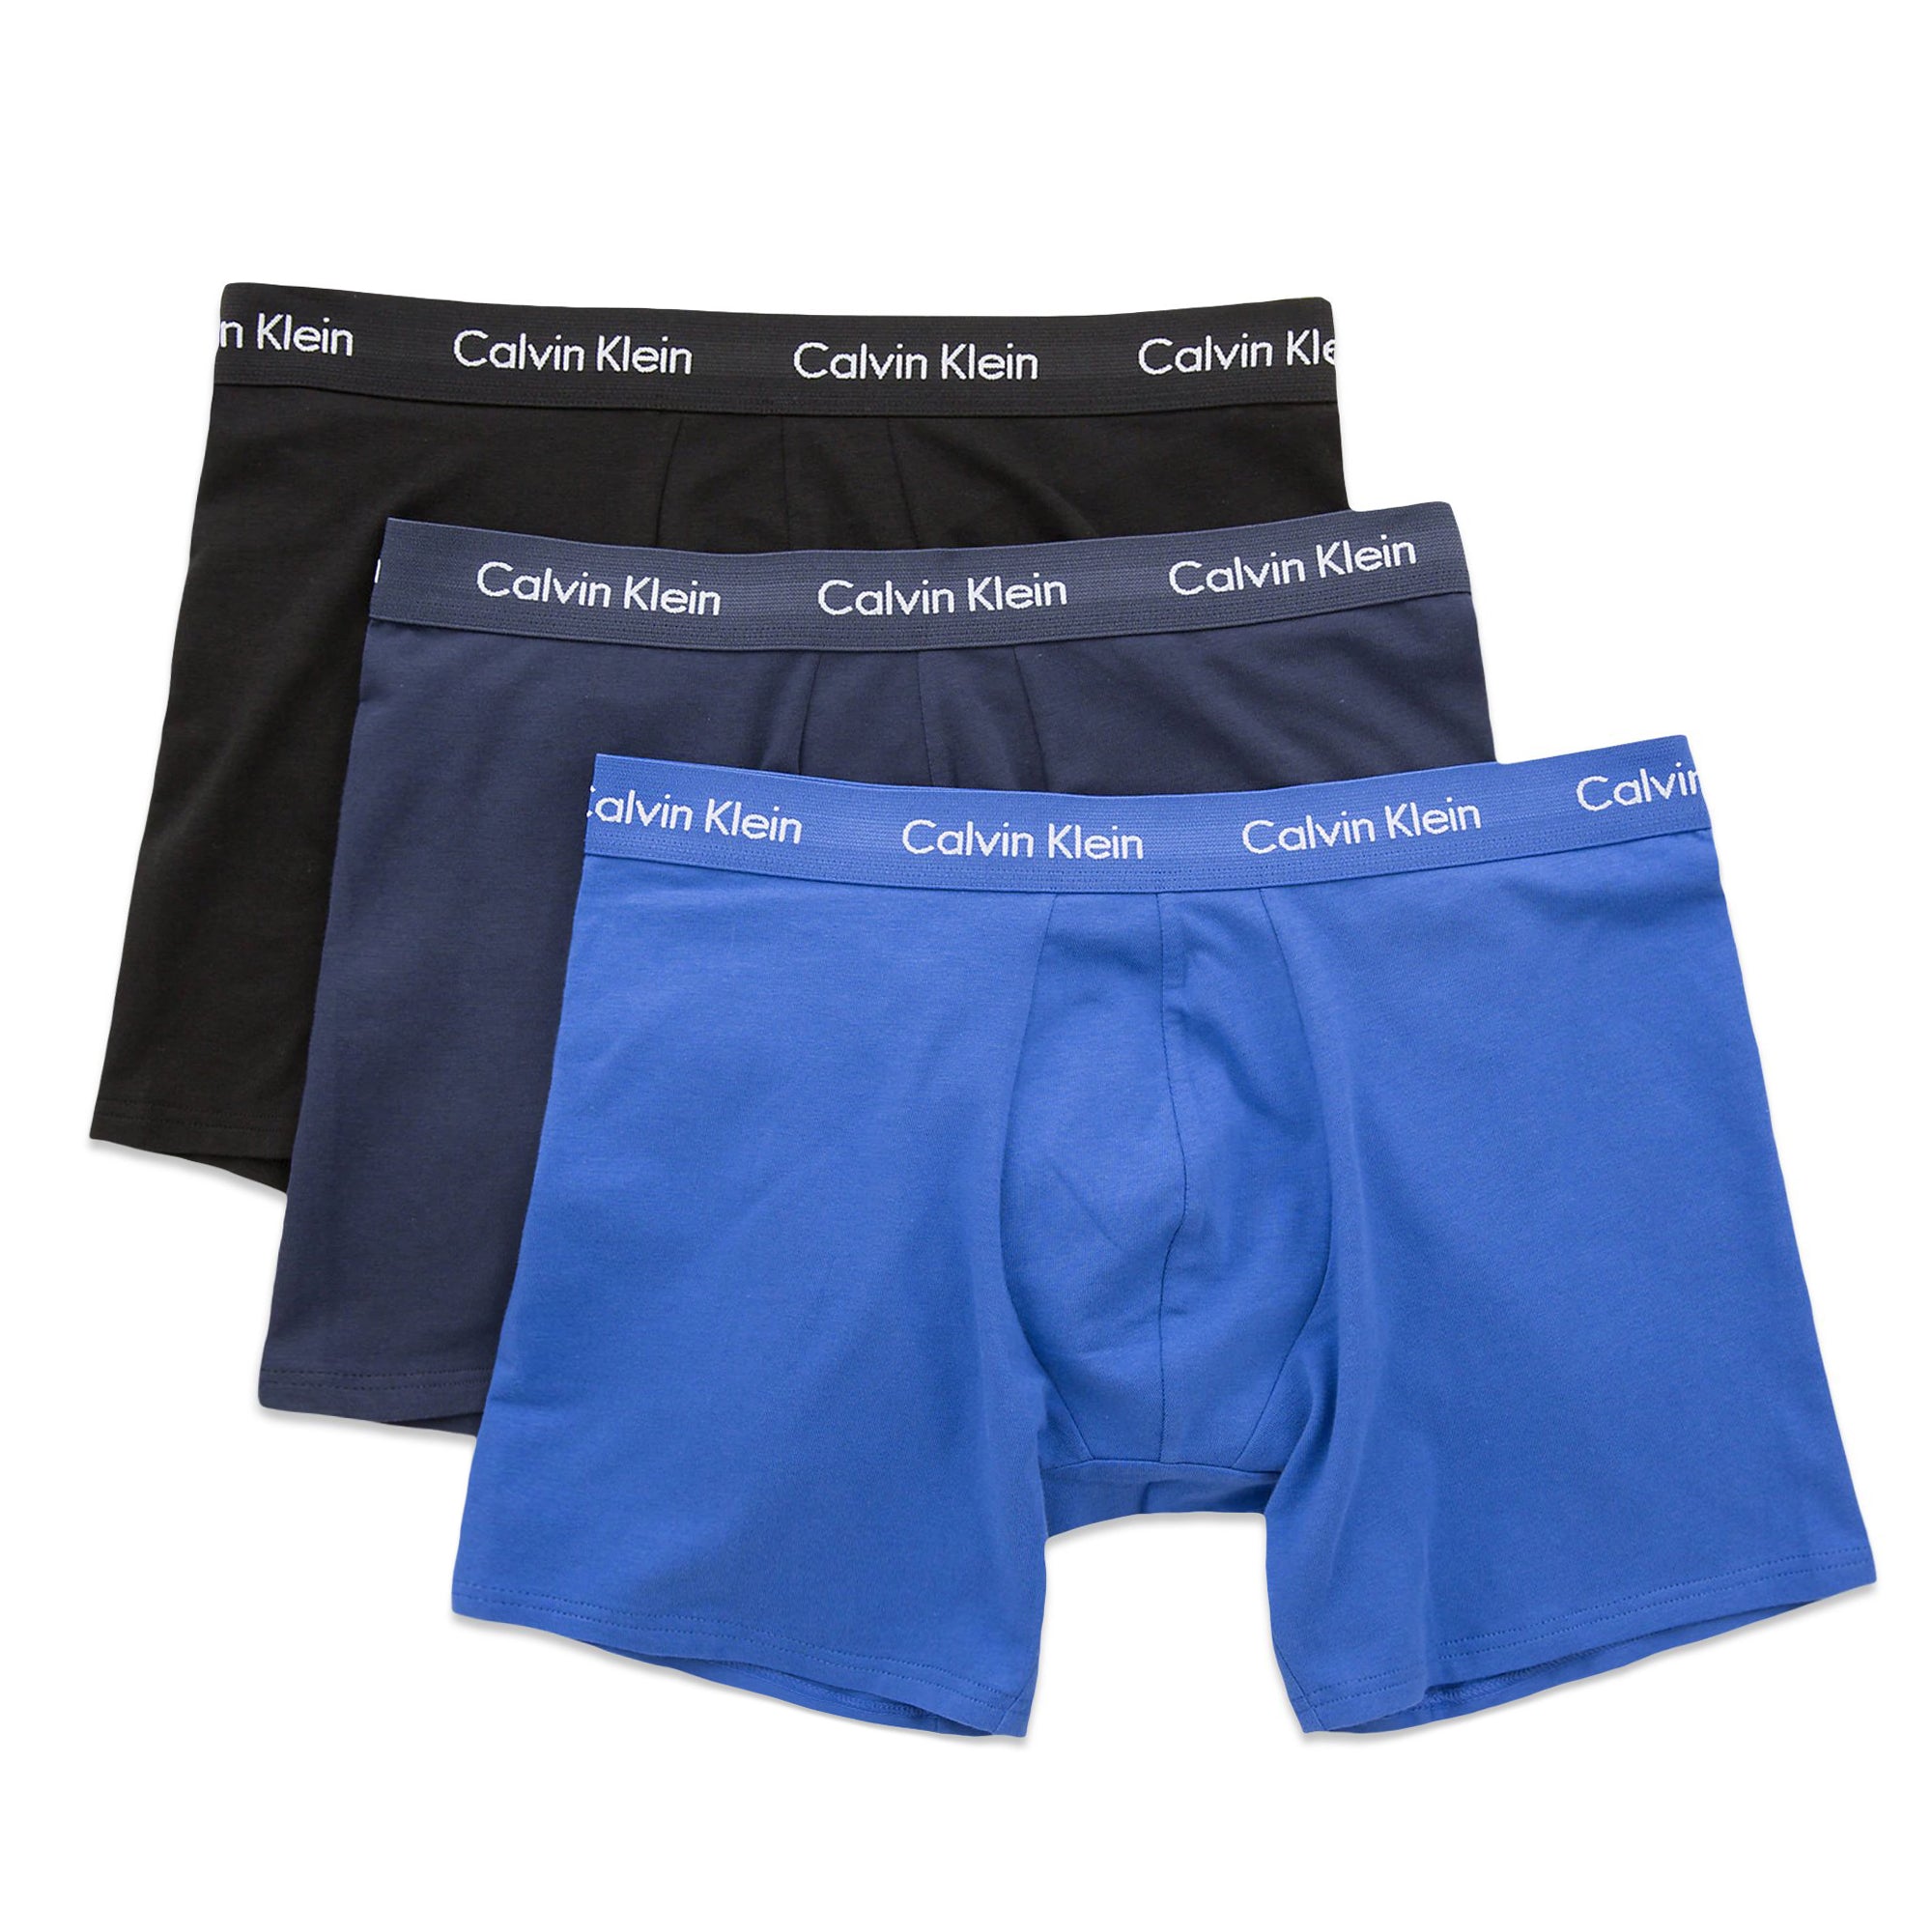 Calvin Klein Cotton Stretch Trunks - Blue/Navy/Black - Arena Menswear